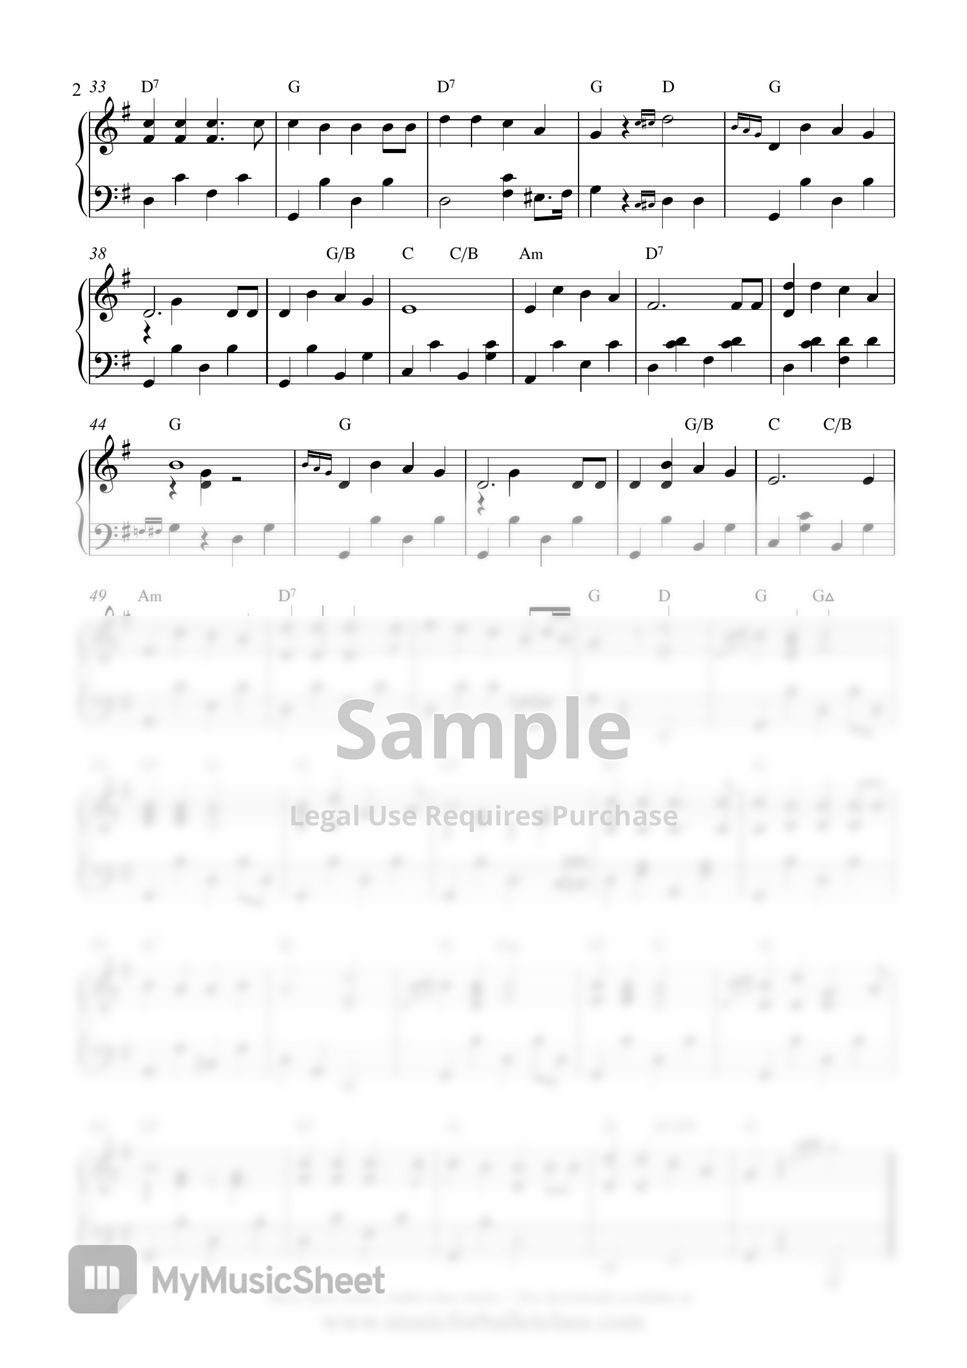 Jingle Bells (Petit allegro) - Christmas Sheet Music for Ballet Class (PDF)